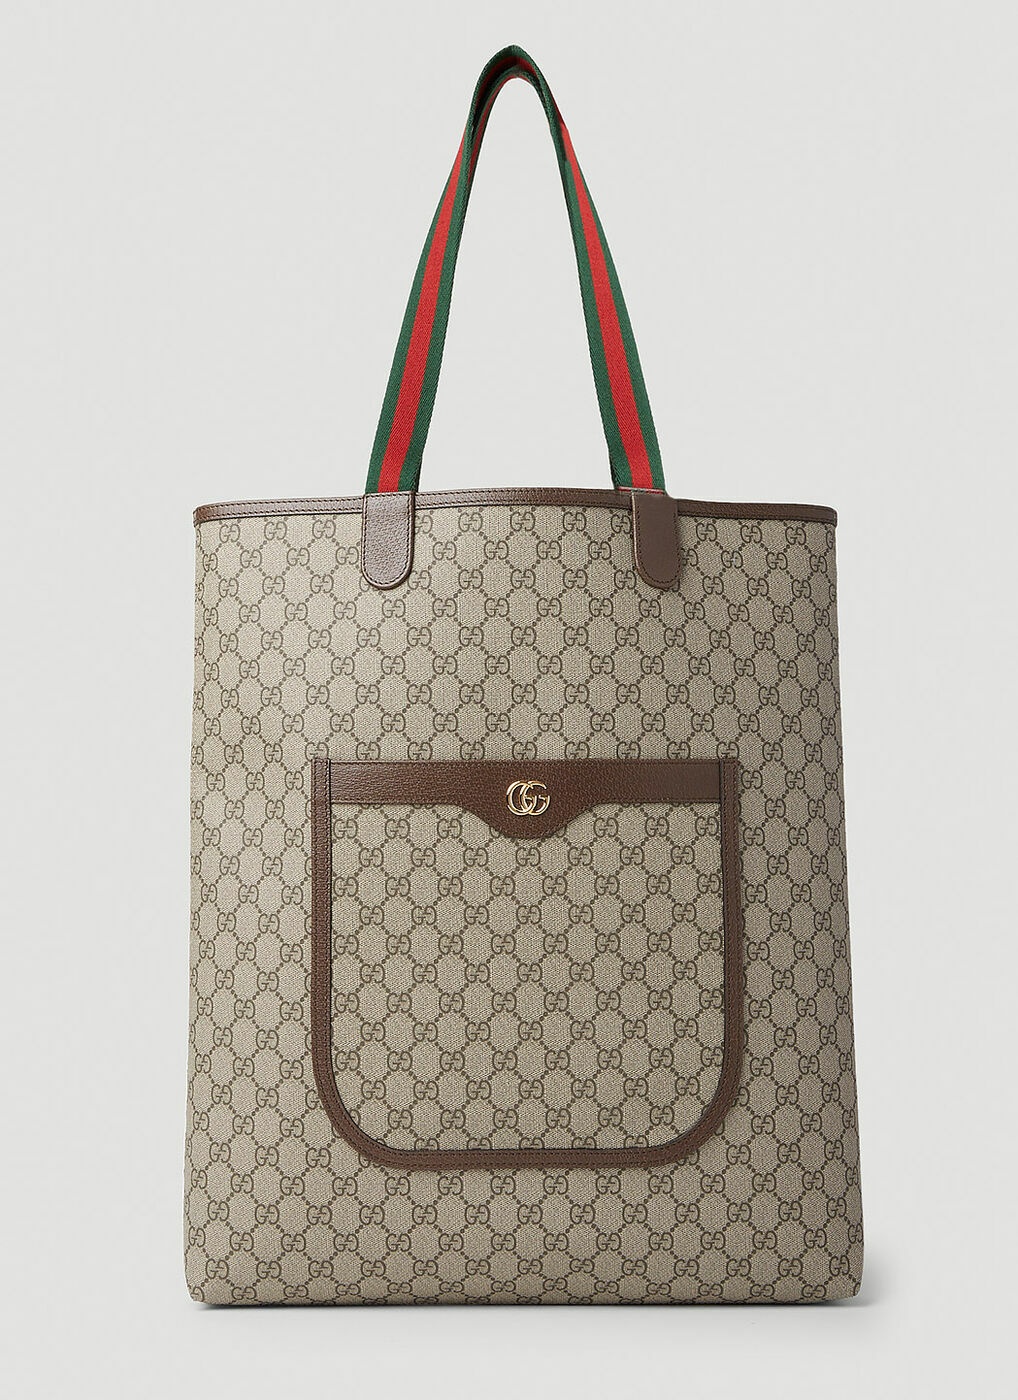 Gucci - Ophidia GG Small Tote Bag in Beige Gucci